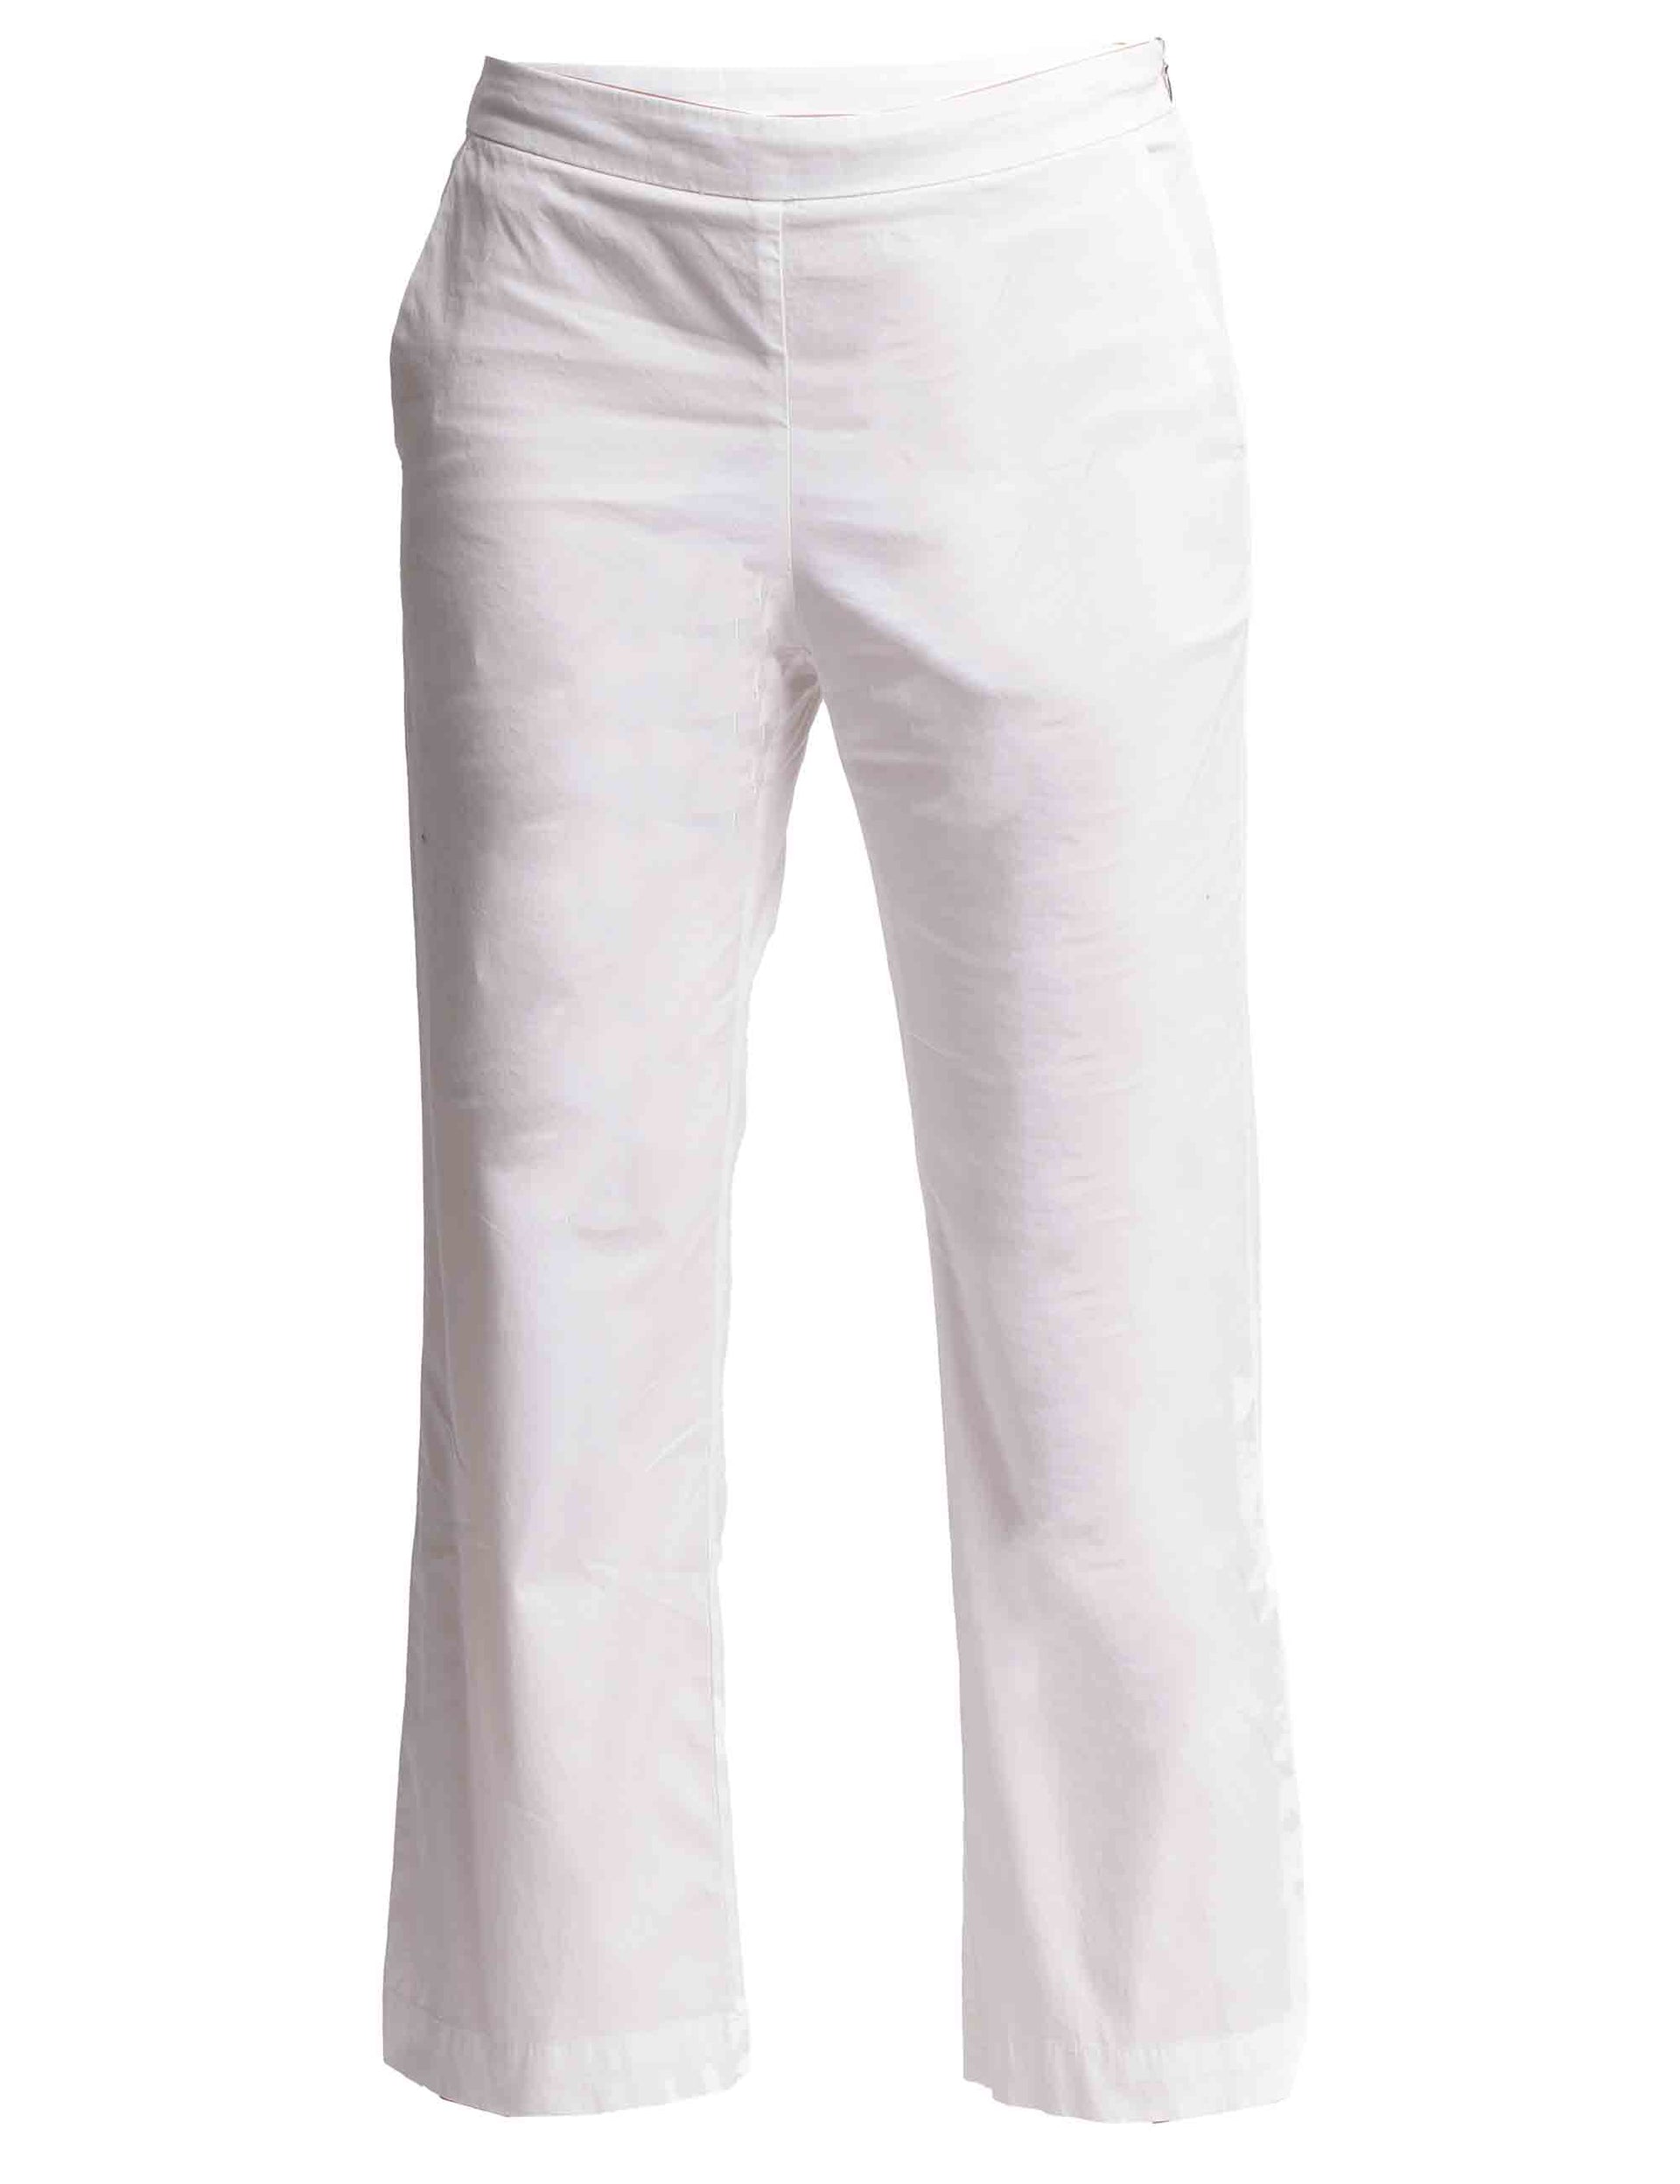 Women's poplin stretch trousers in white cotton